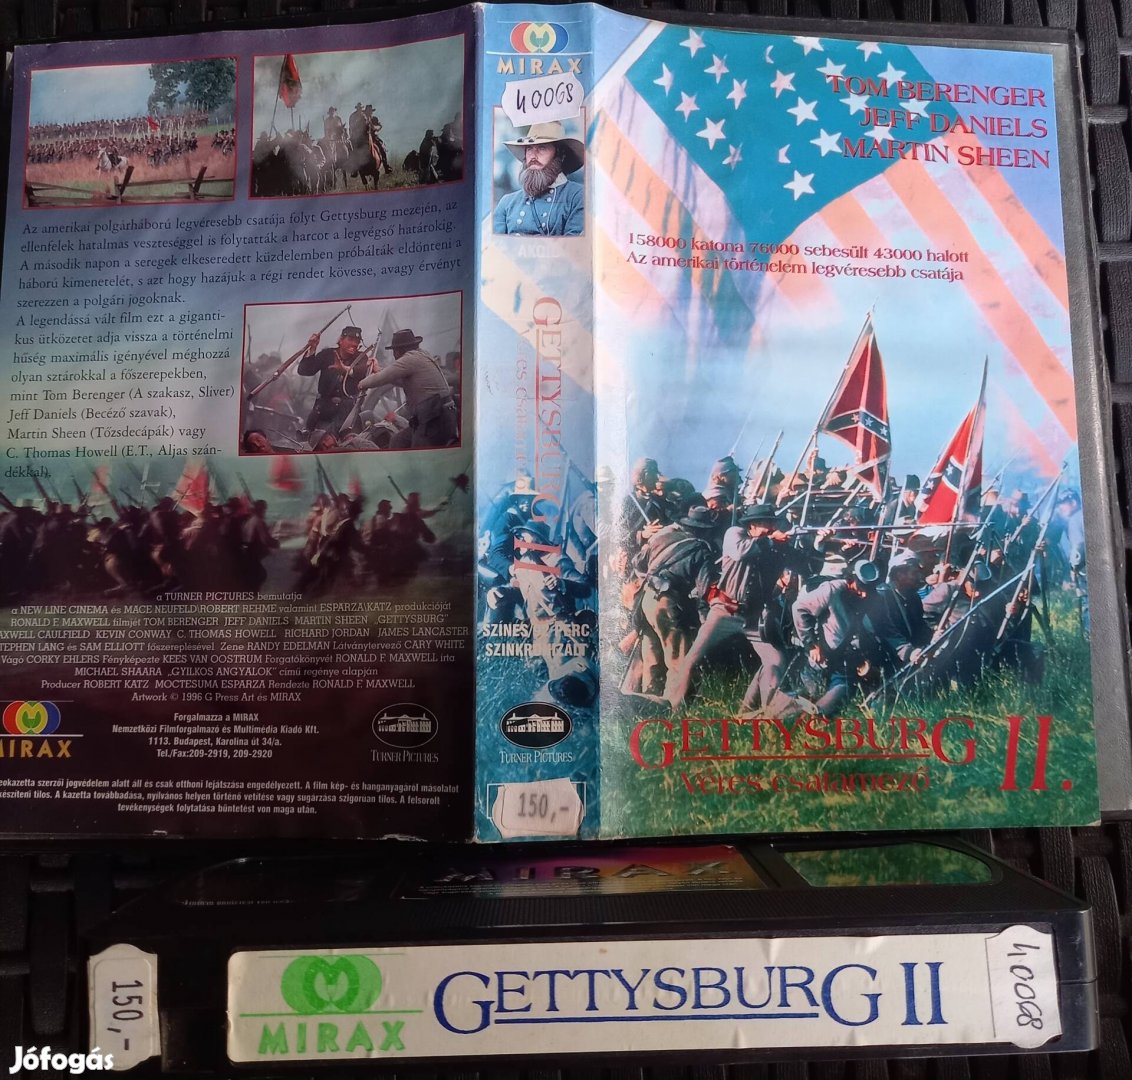 Gettysburg II. - háborus vhs- Jeff Daniels